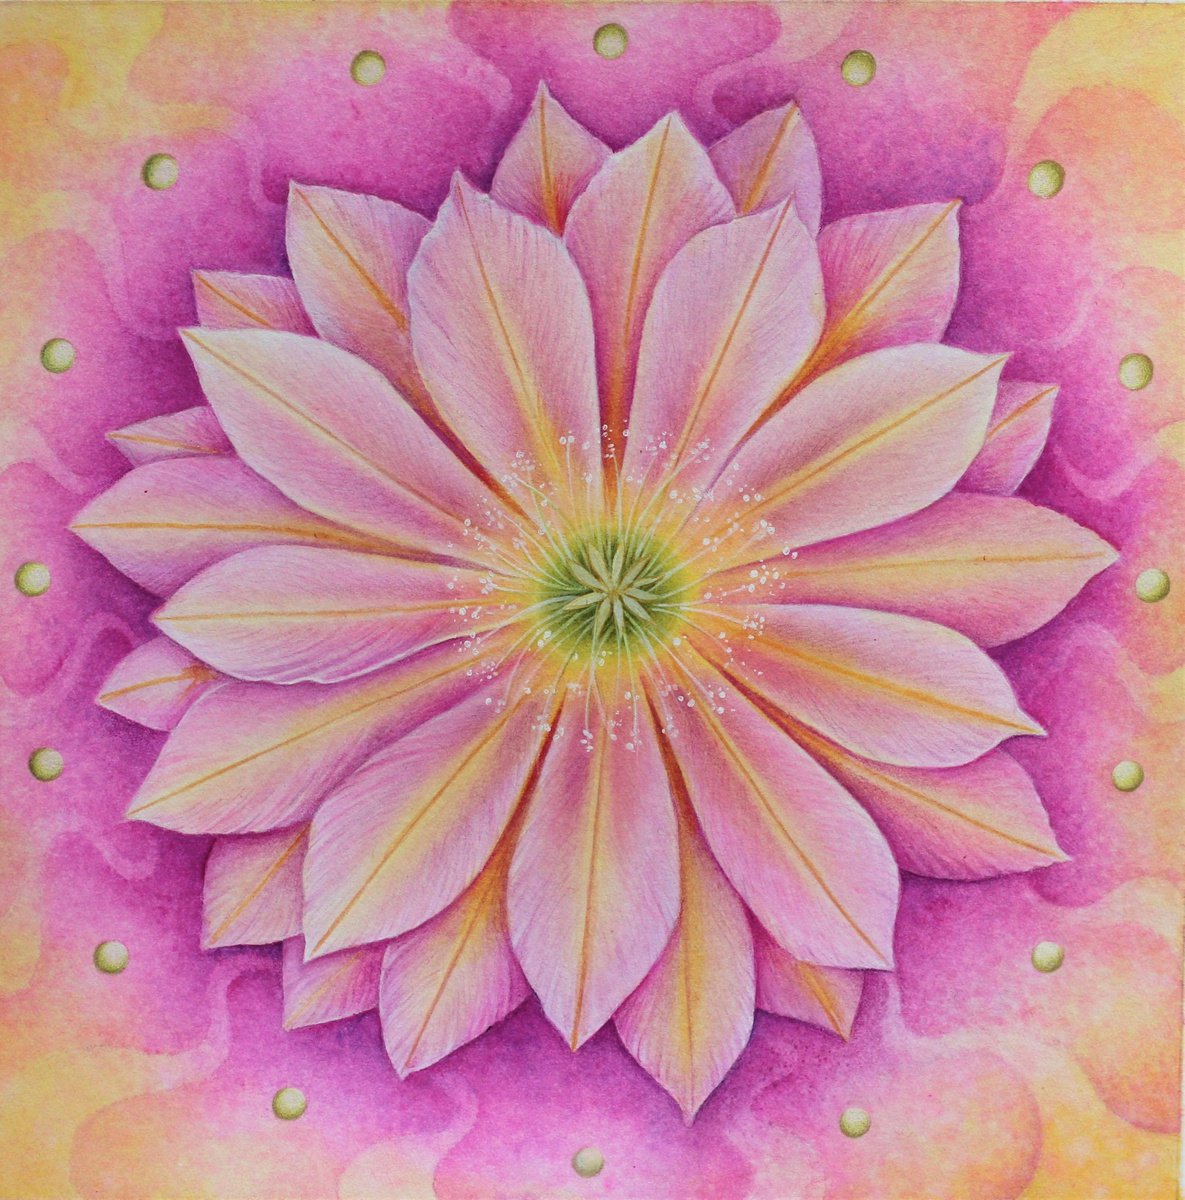 Flower Power by Lorraine Sadler